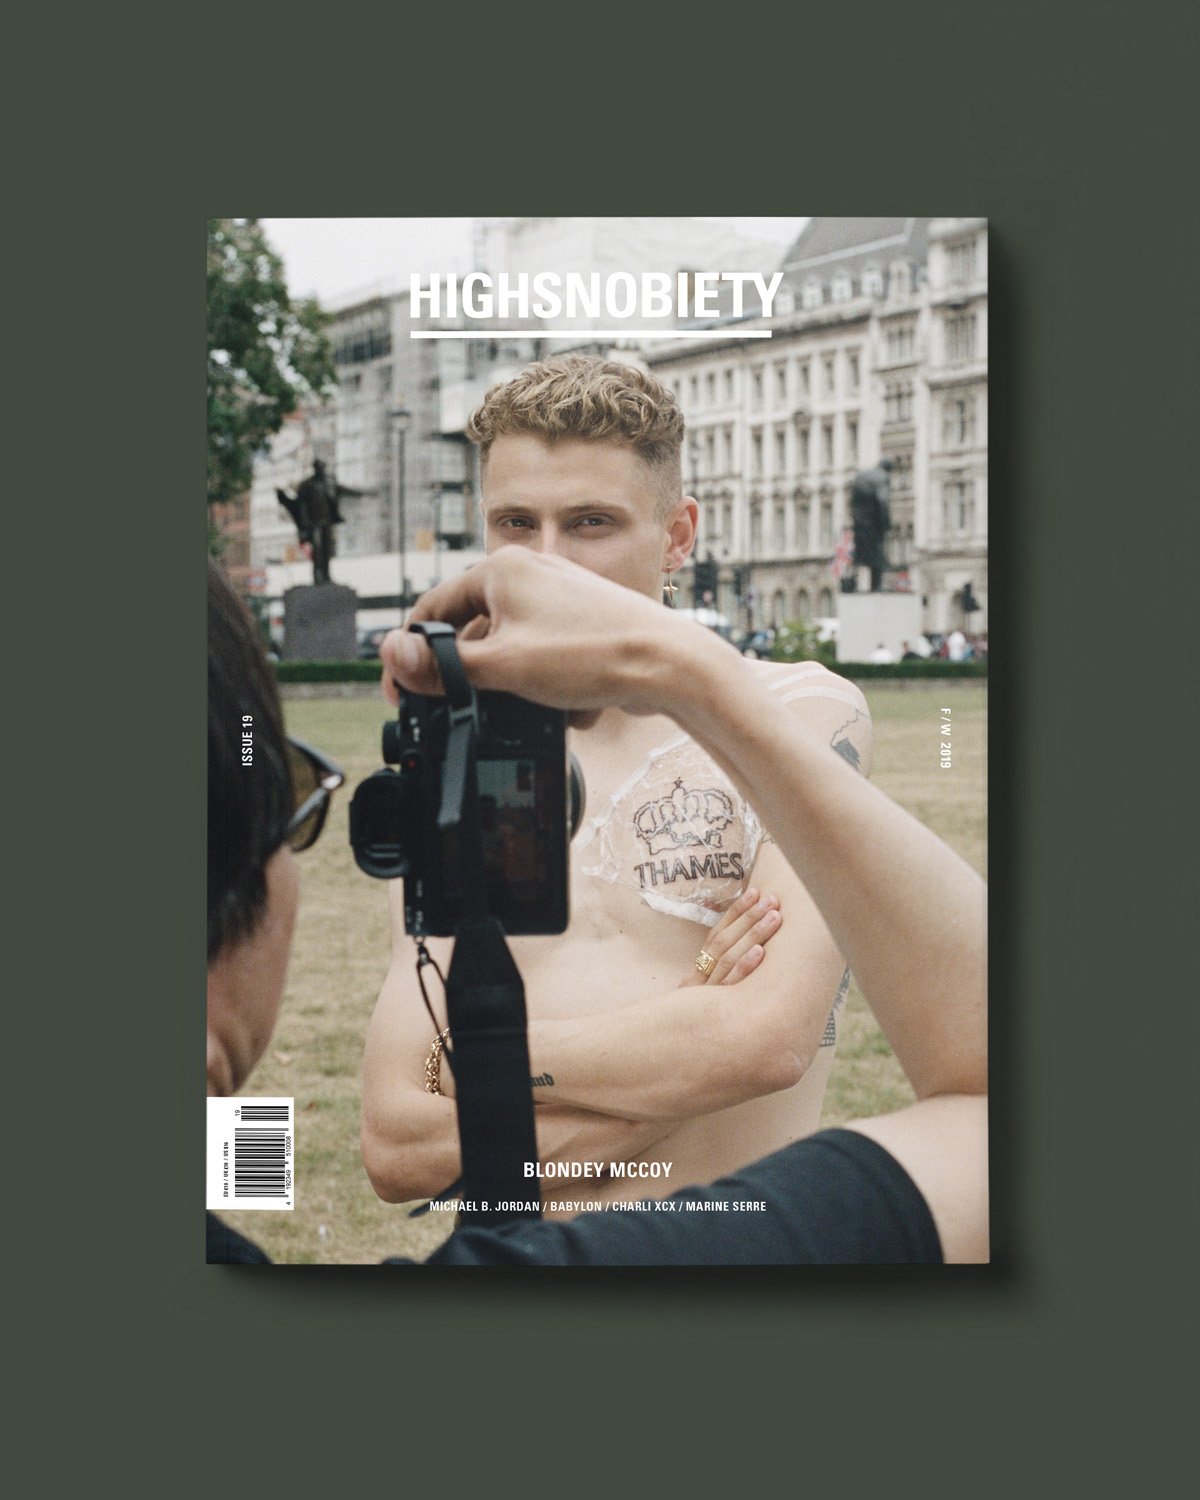 Highsnobiety - Magazine Issue 19: Keinemusik Vinyl Edition - Lifestyle - Multi - Image 2